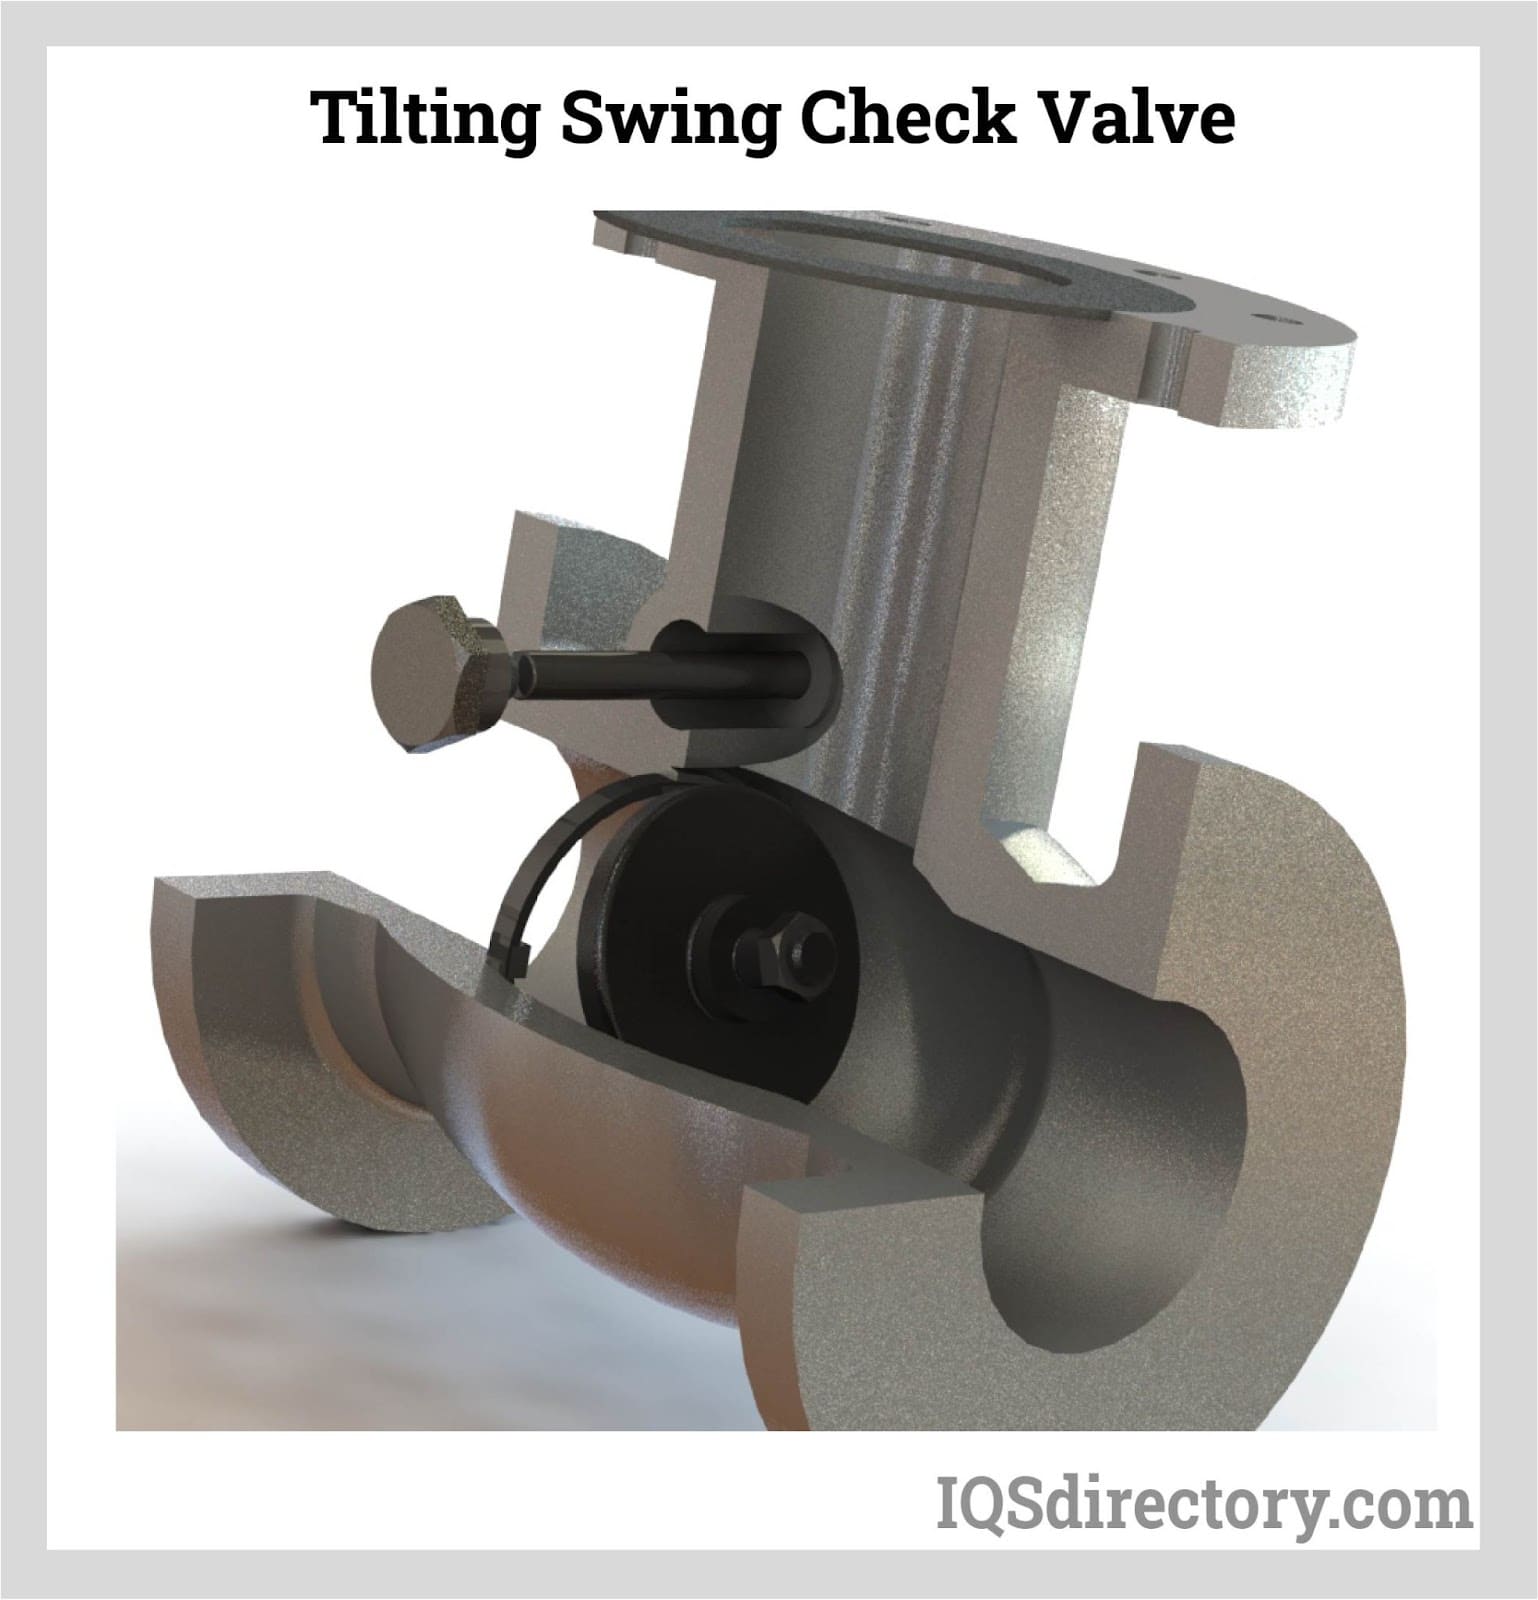 Tilting Swing Check Valve